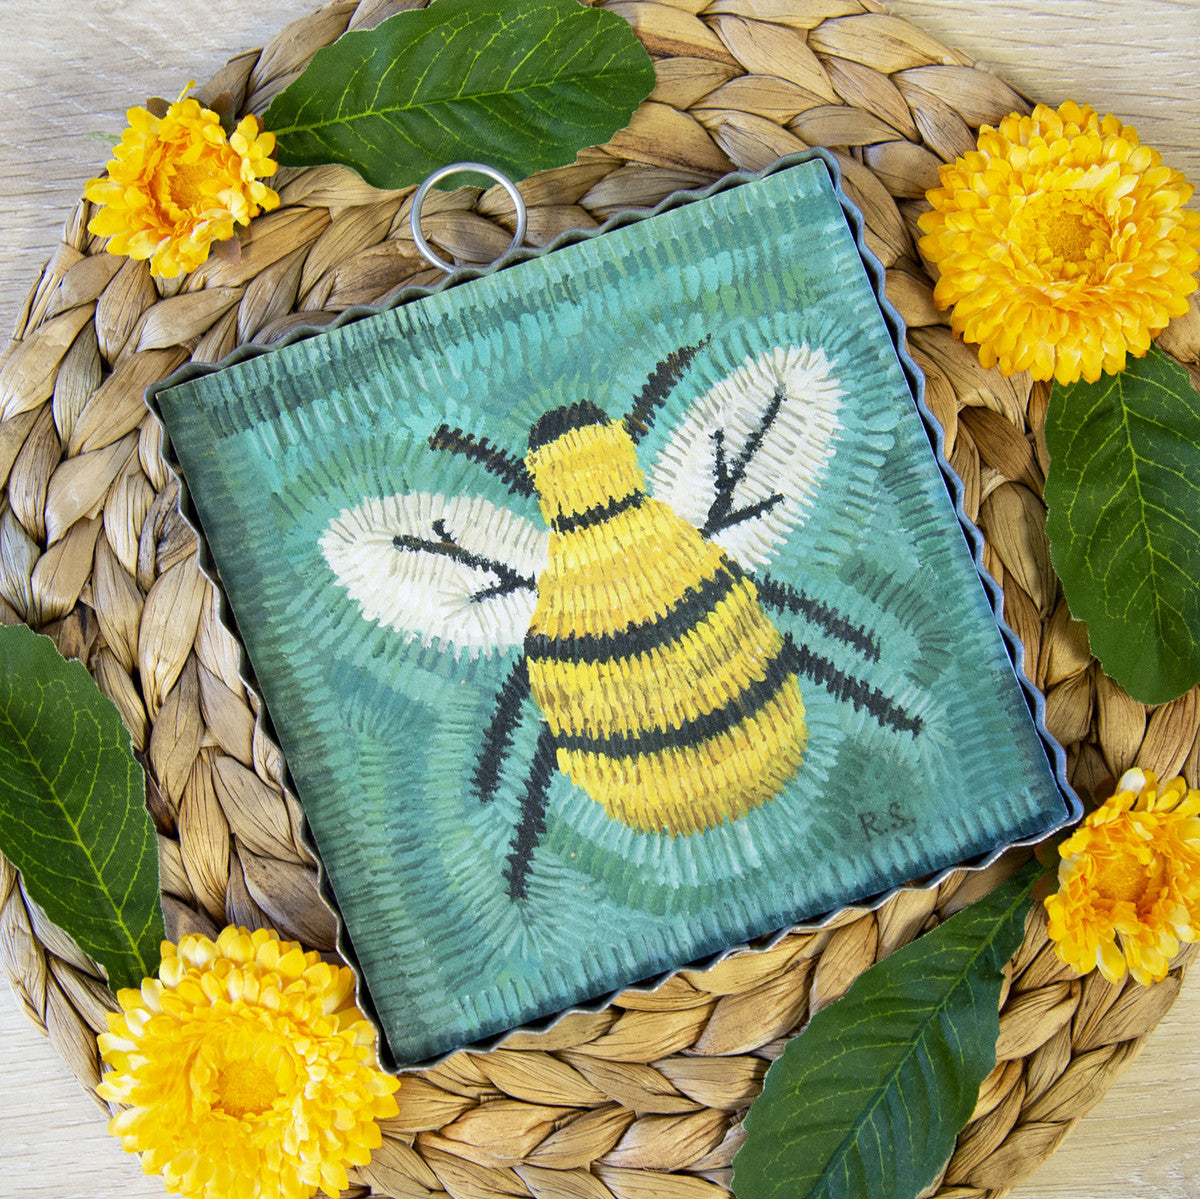 Gallery Mini || Needlework Bee Print